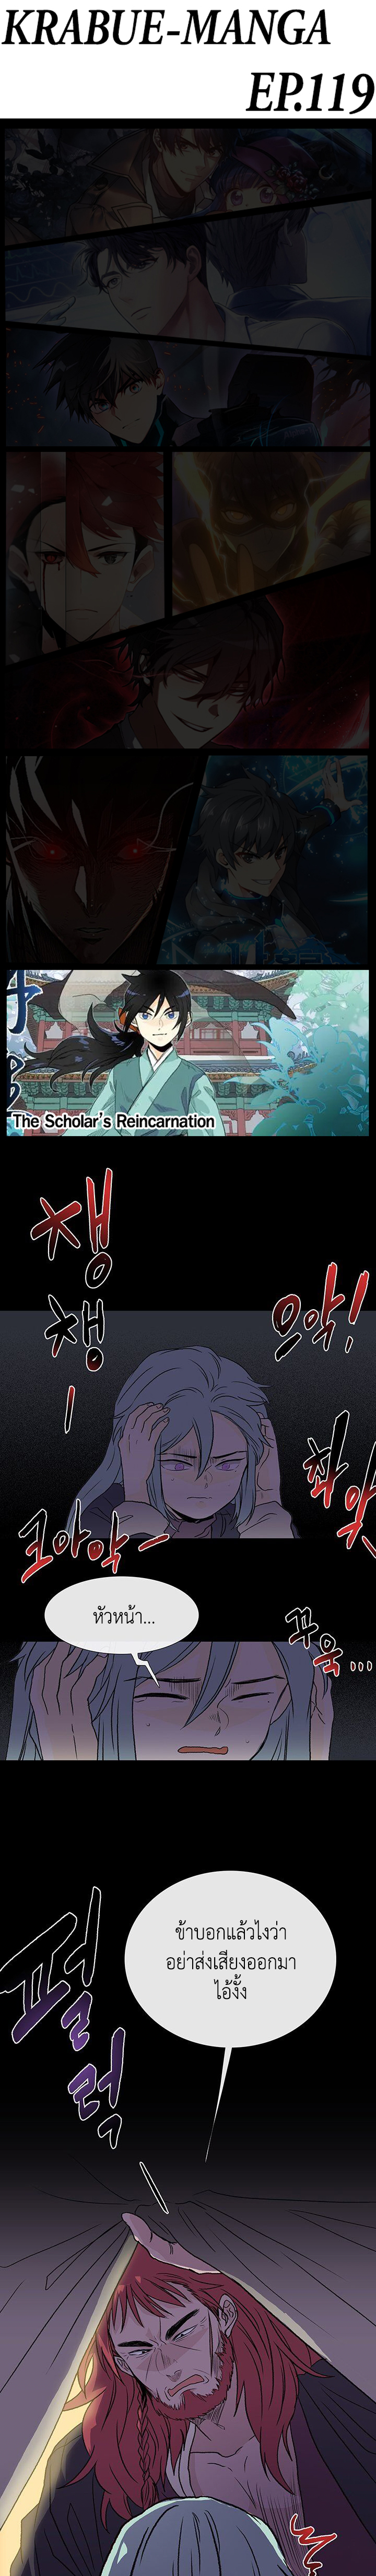 The Scholar’s Reincarnation119 01